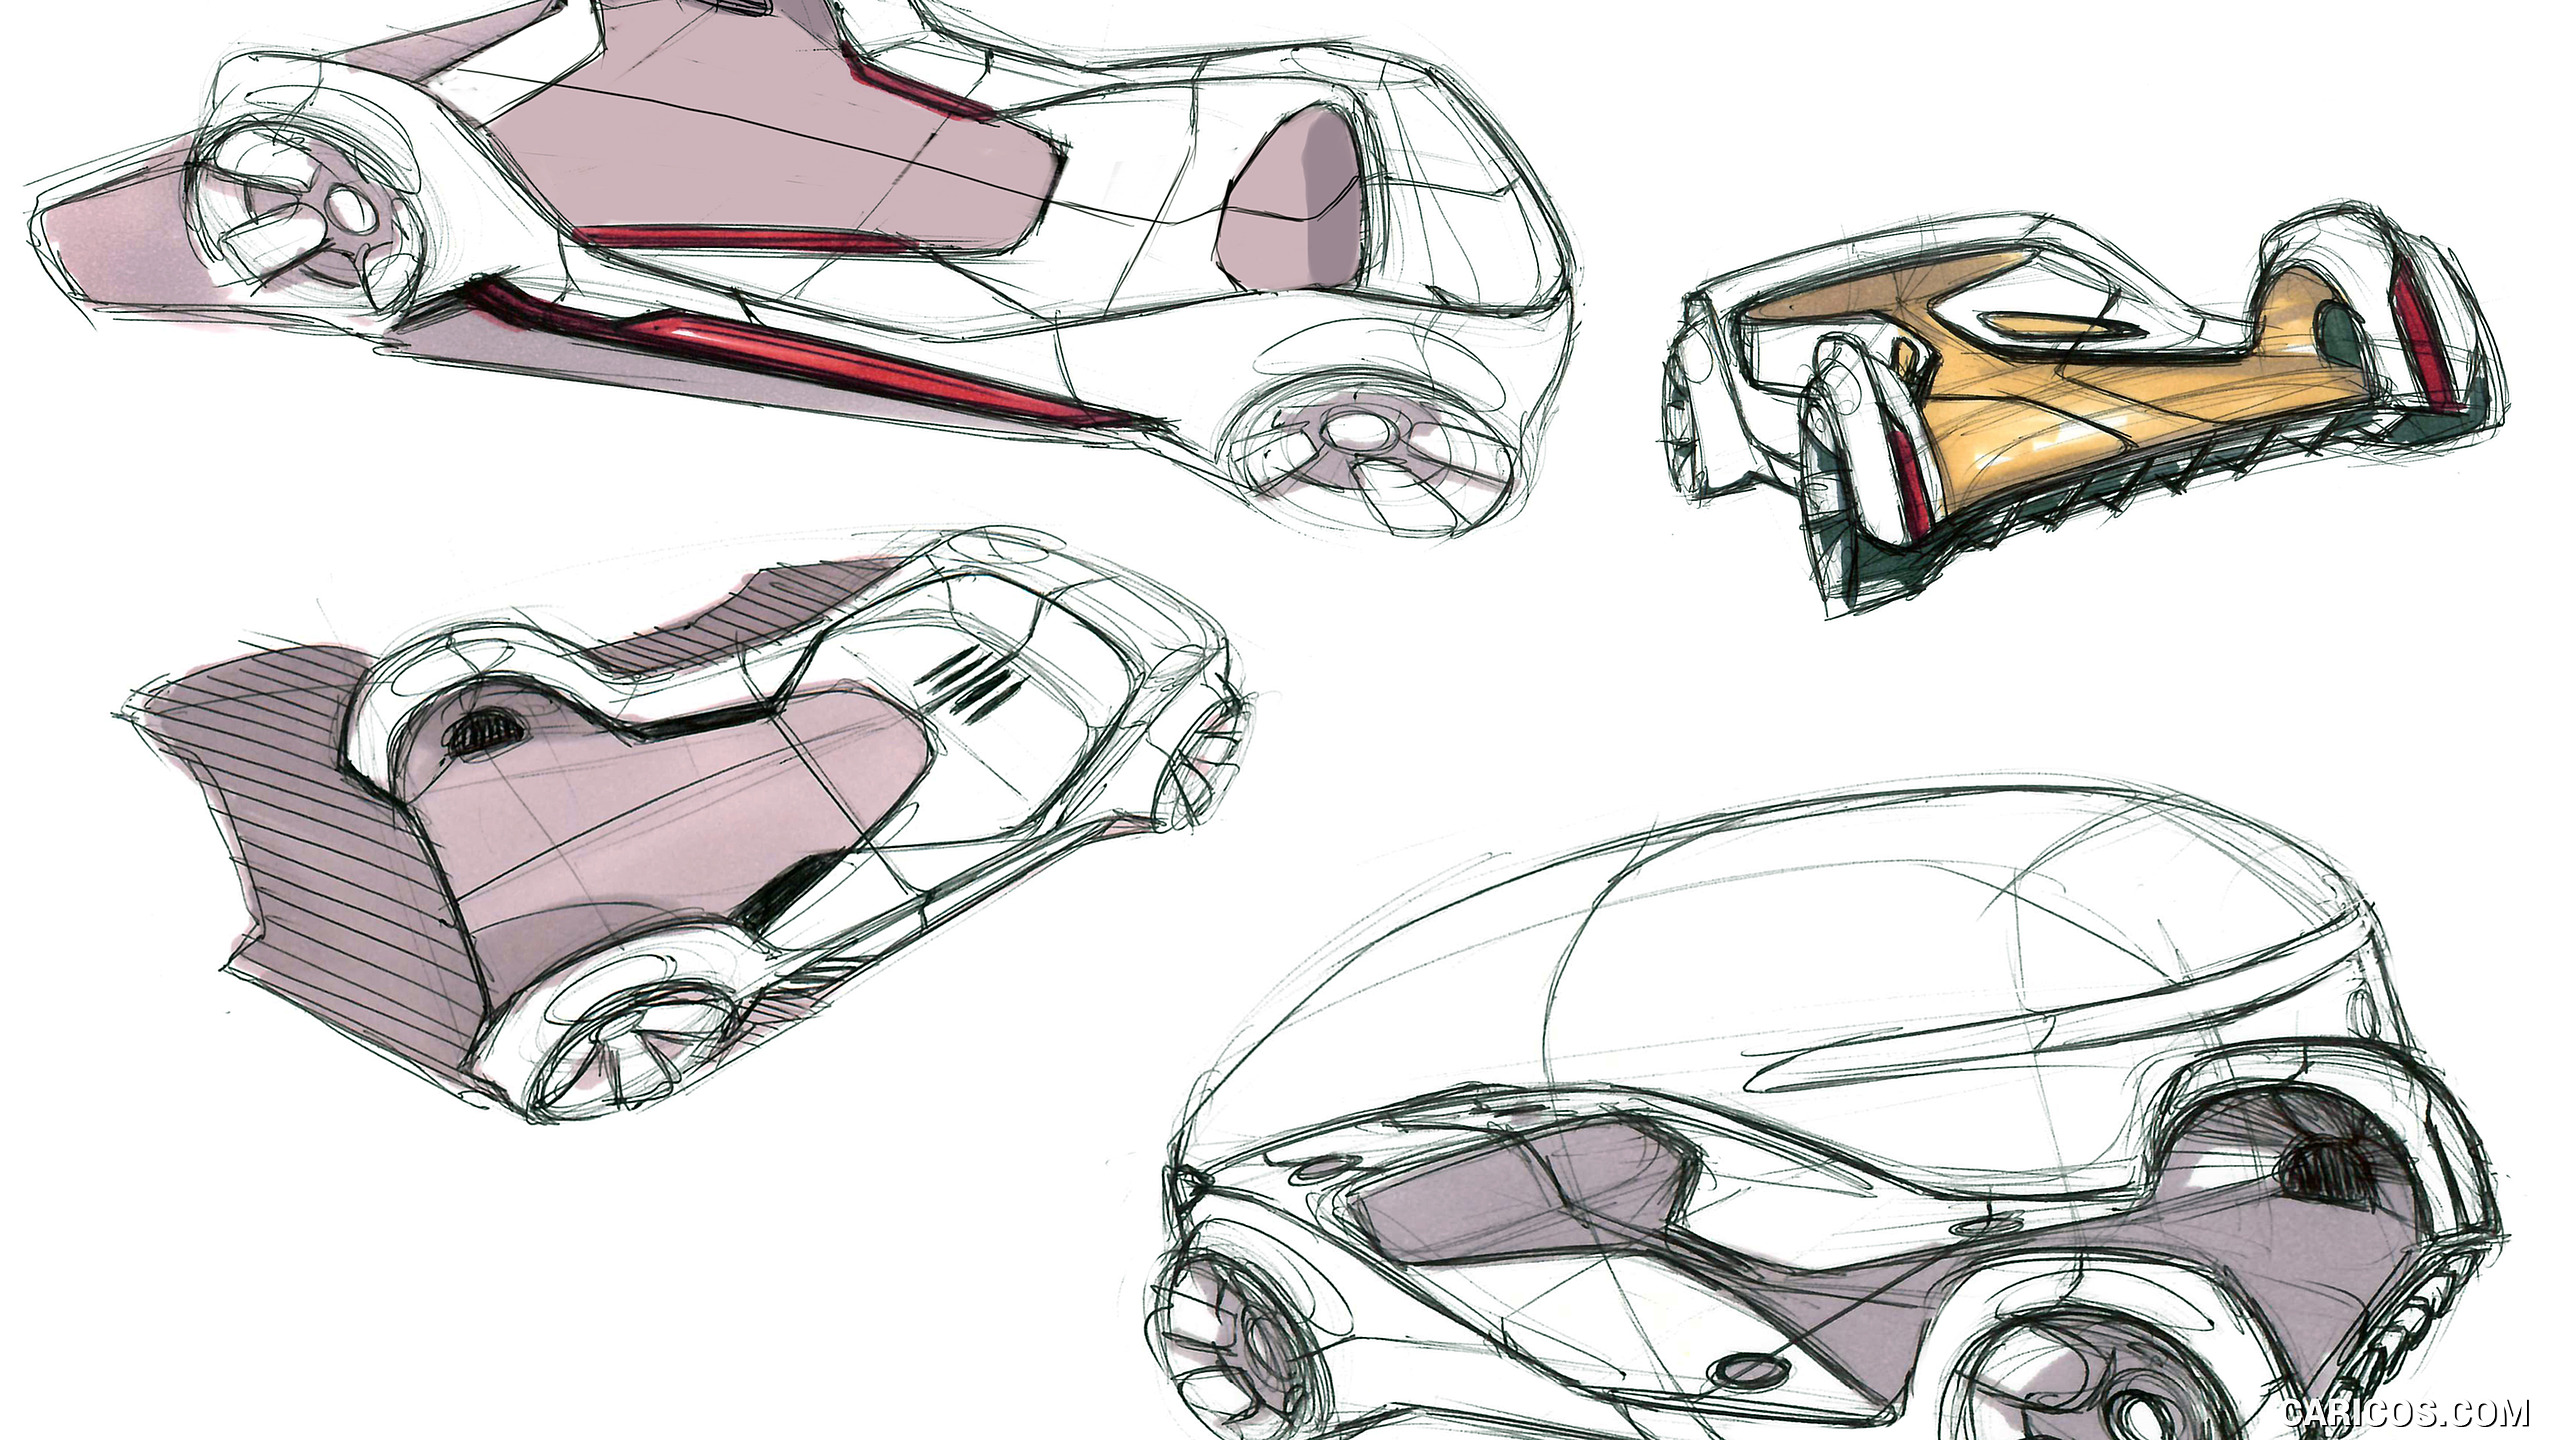 2018 Mercedes-Benz Vision URBANETIC Concept - Design Sketch, #13 of 14